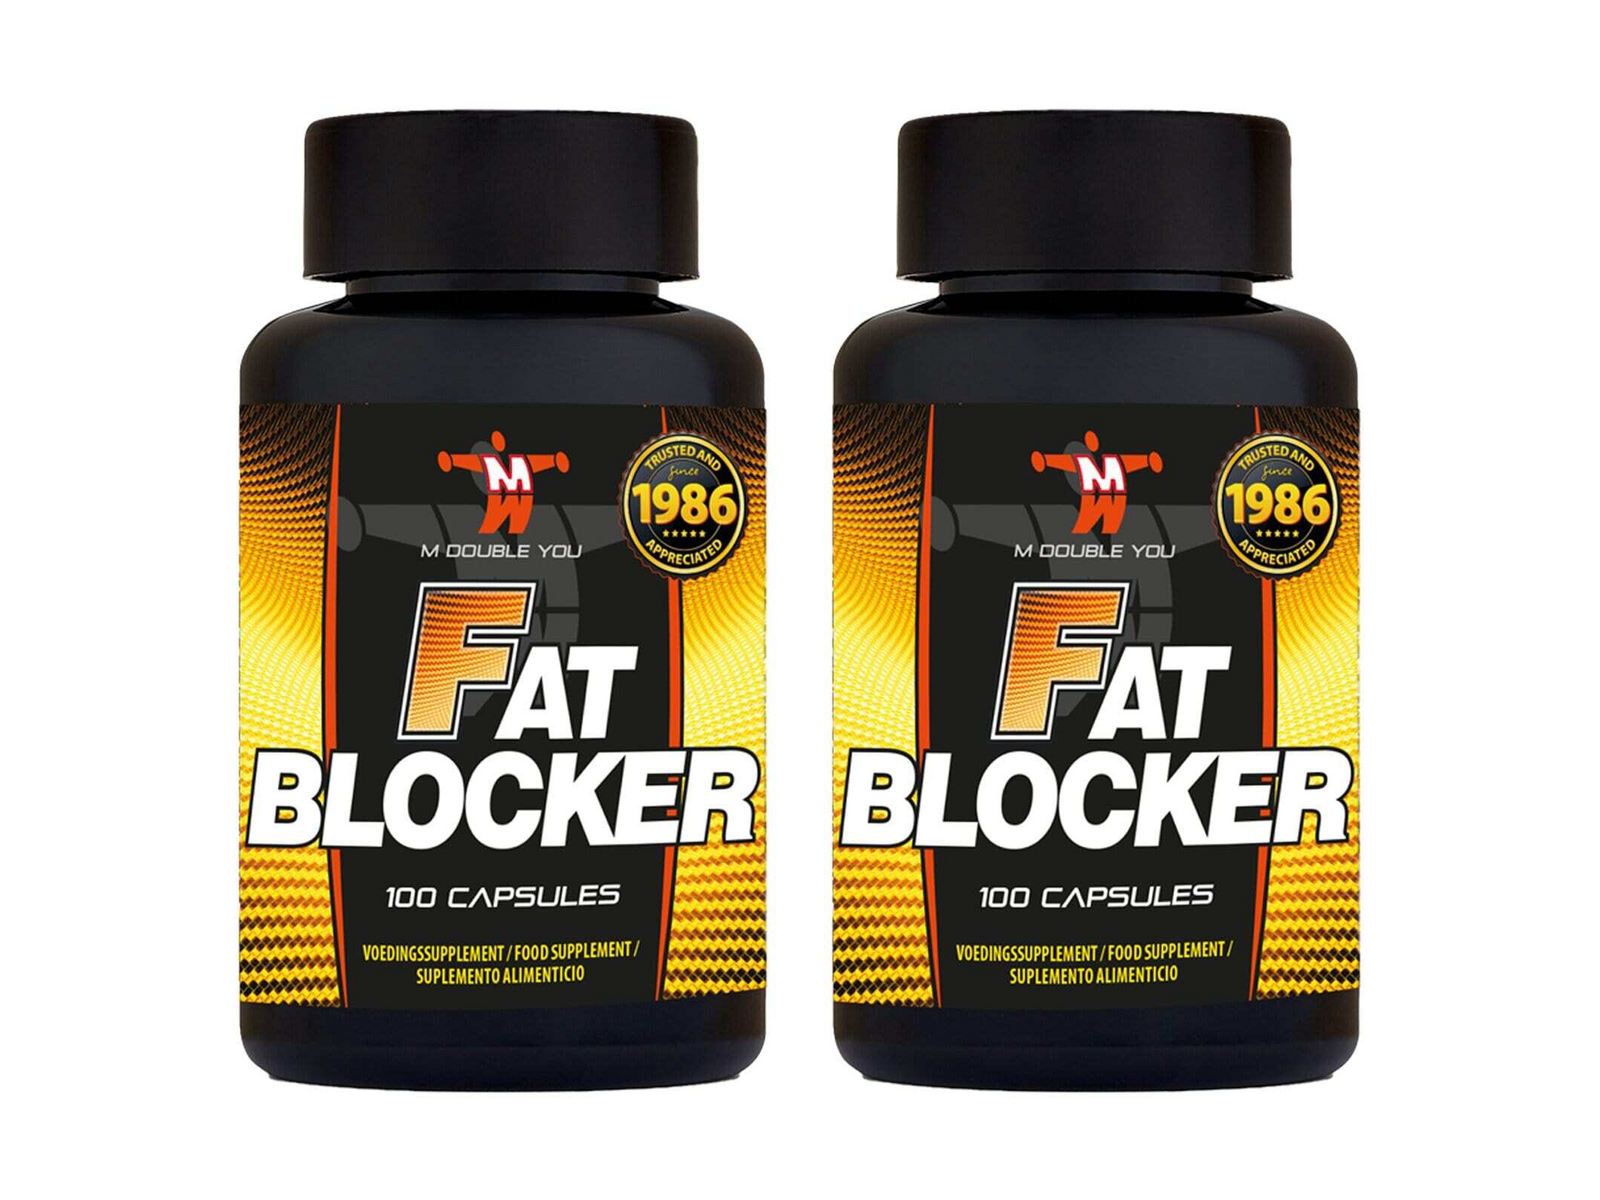 M DOUBLE YOU - Fatblocker (100 capsules - 2-pack)